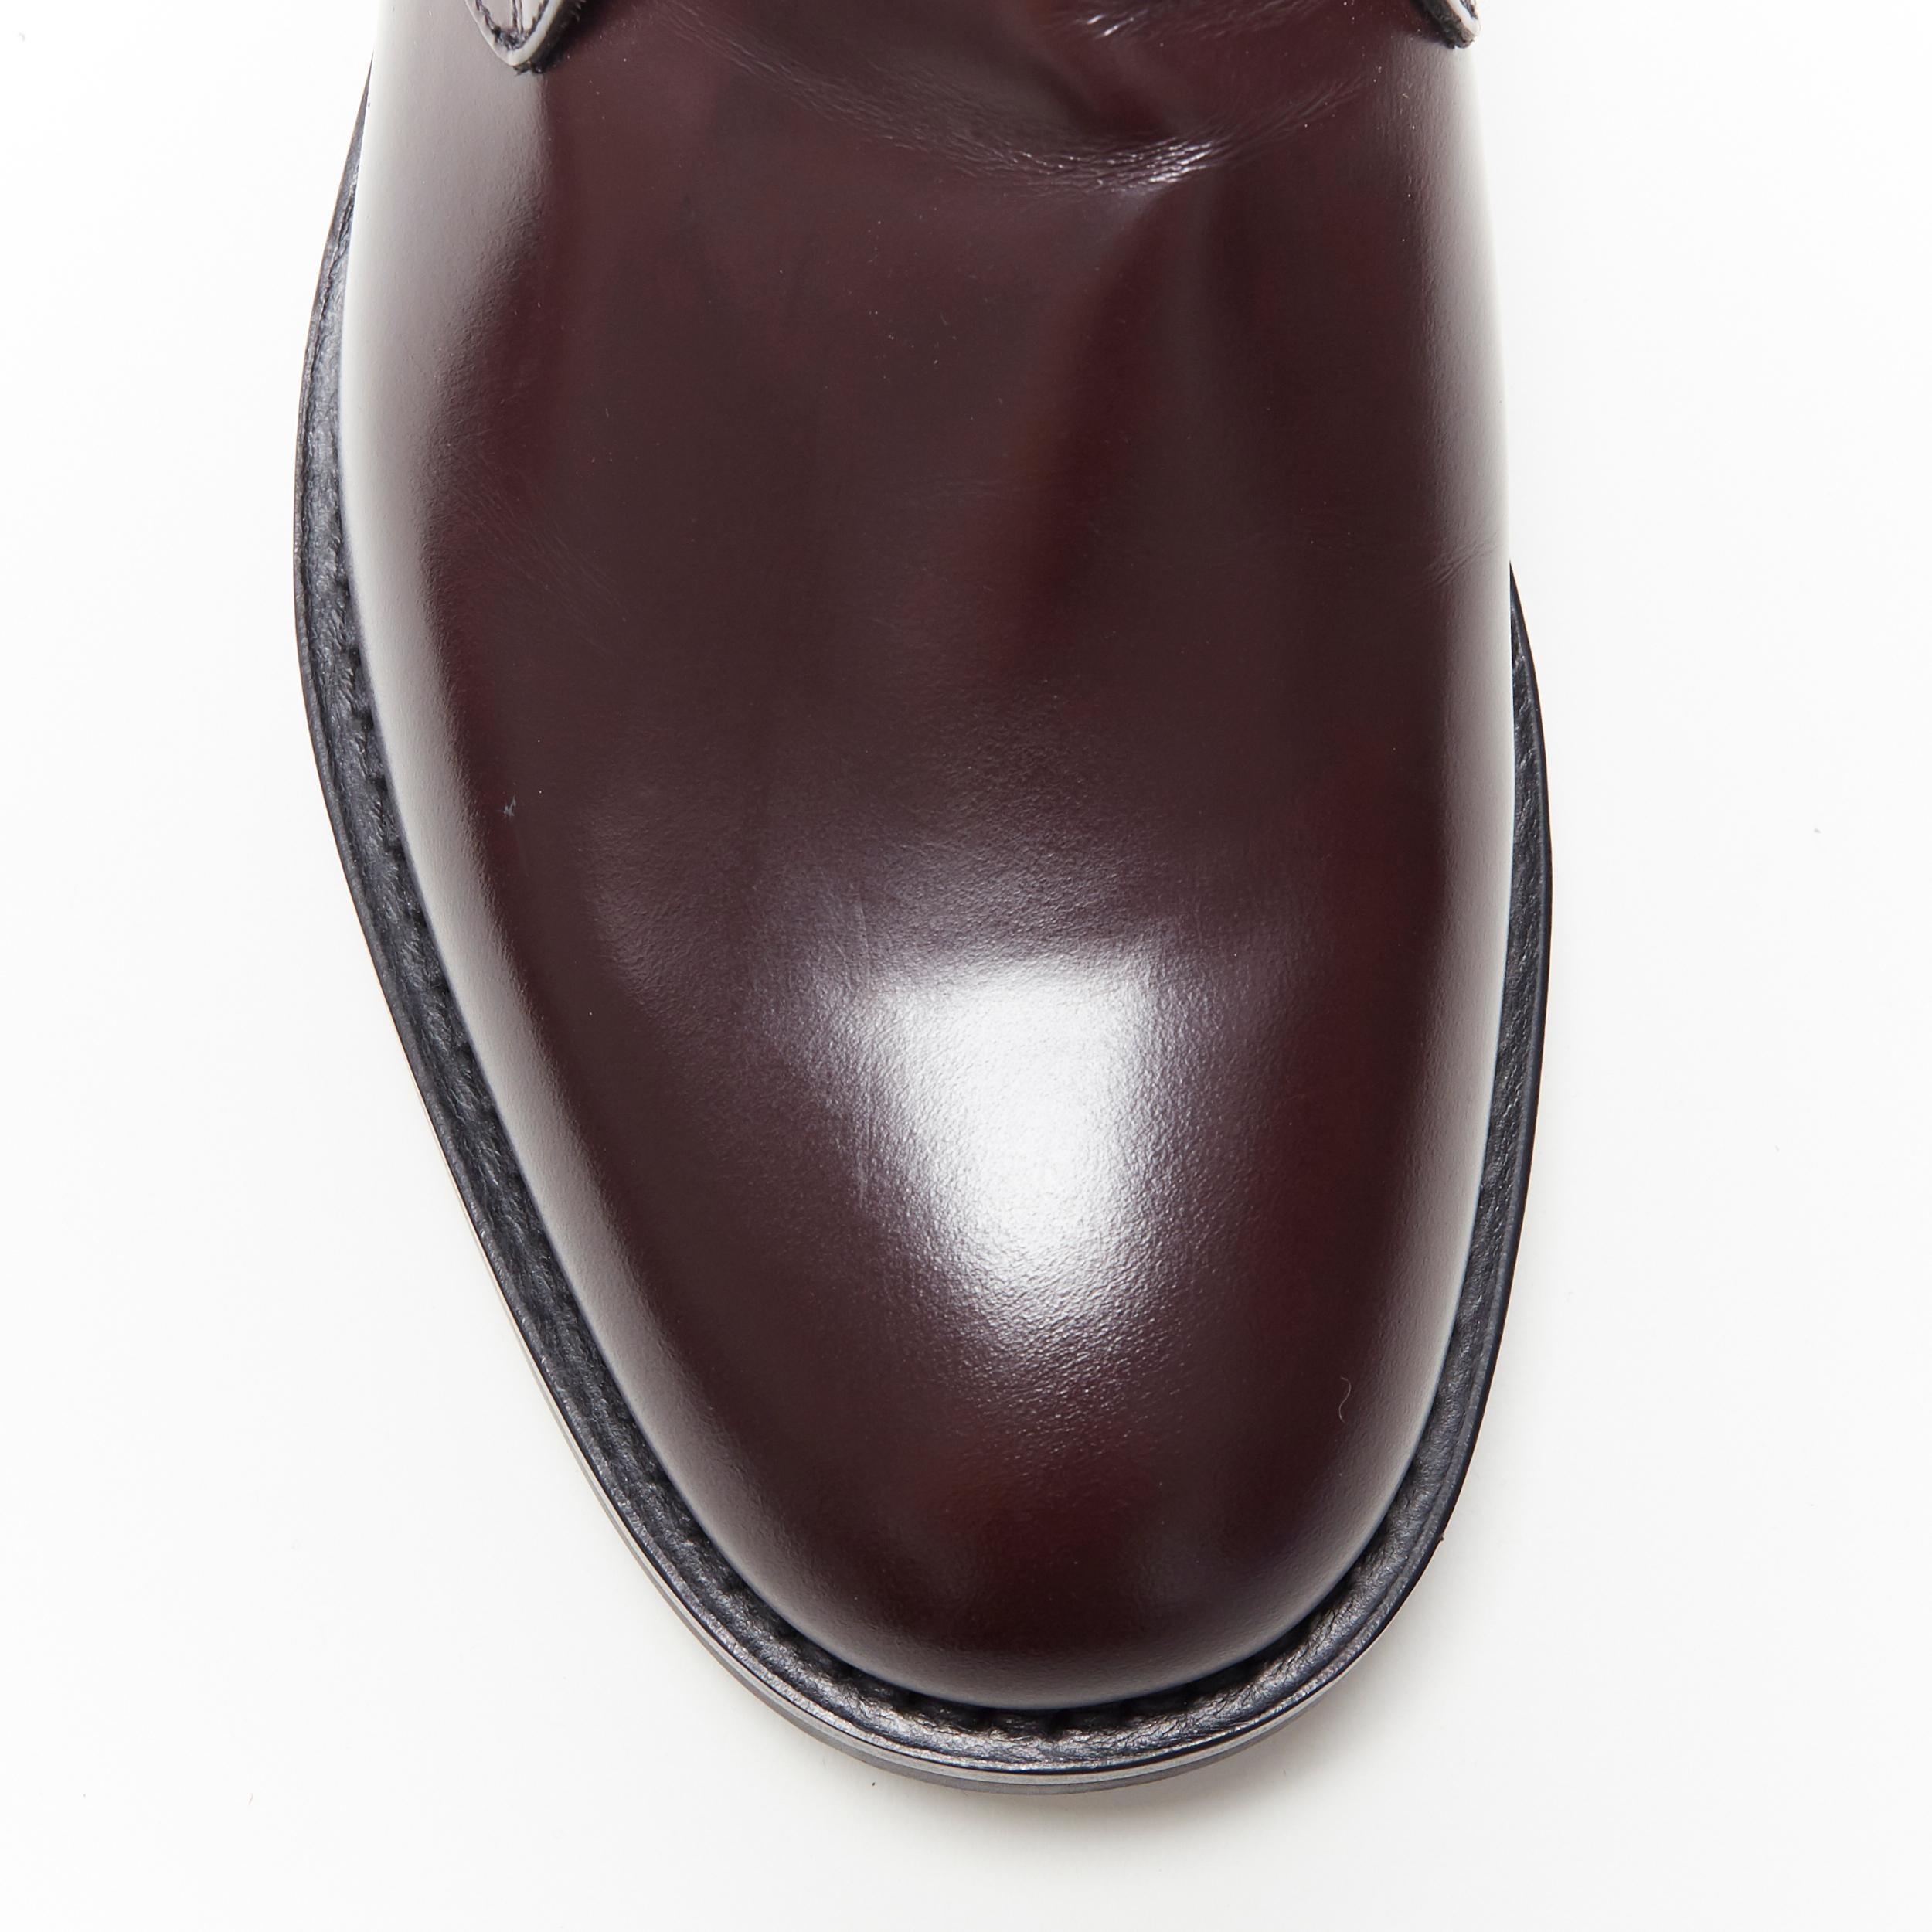 new CHURCHS Ryder 3 Burgundy Bright Calf polished leather chukka boots UK11 EU45 2